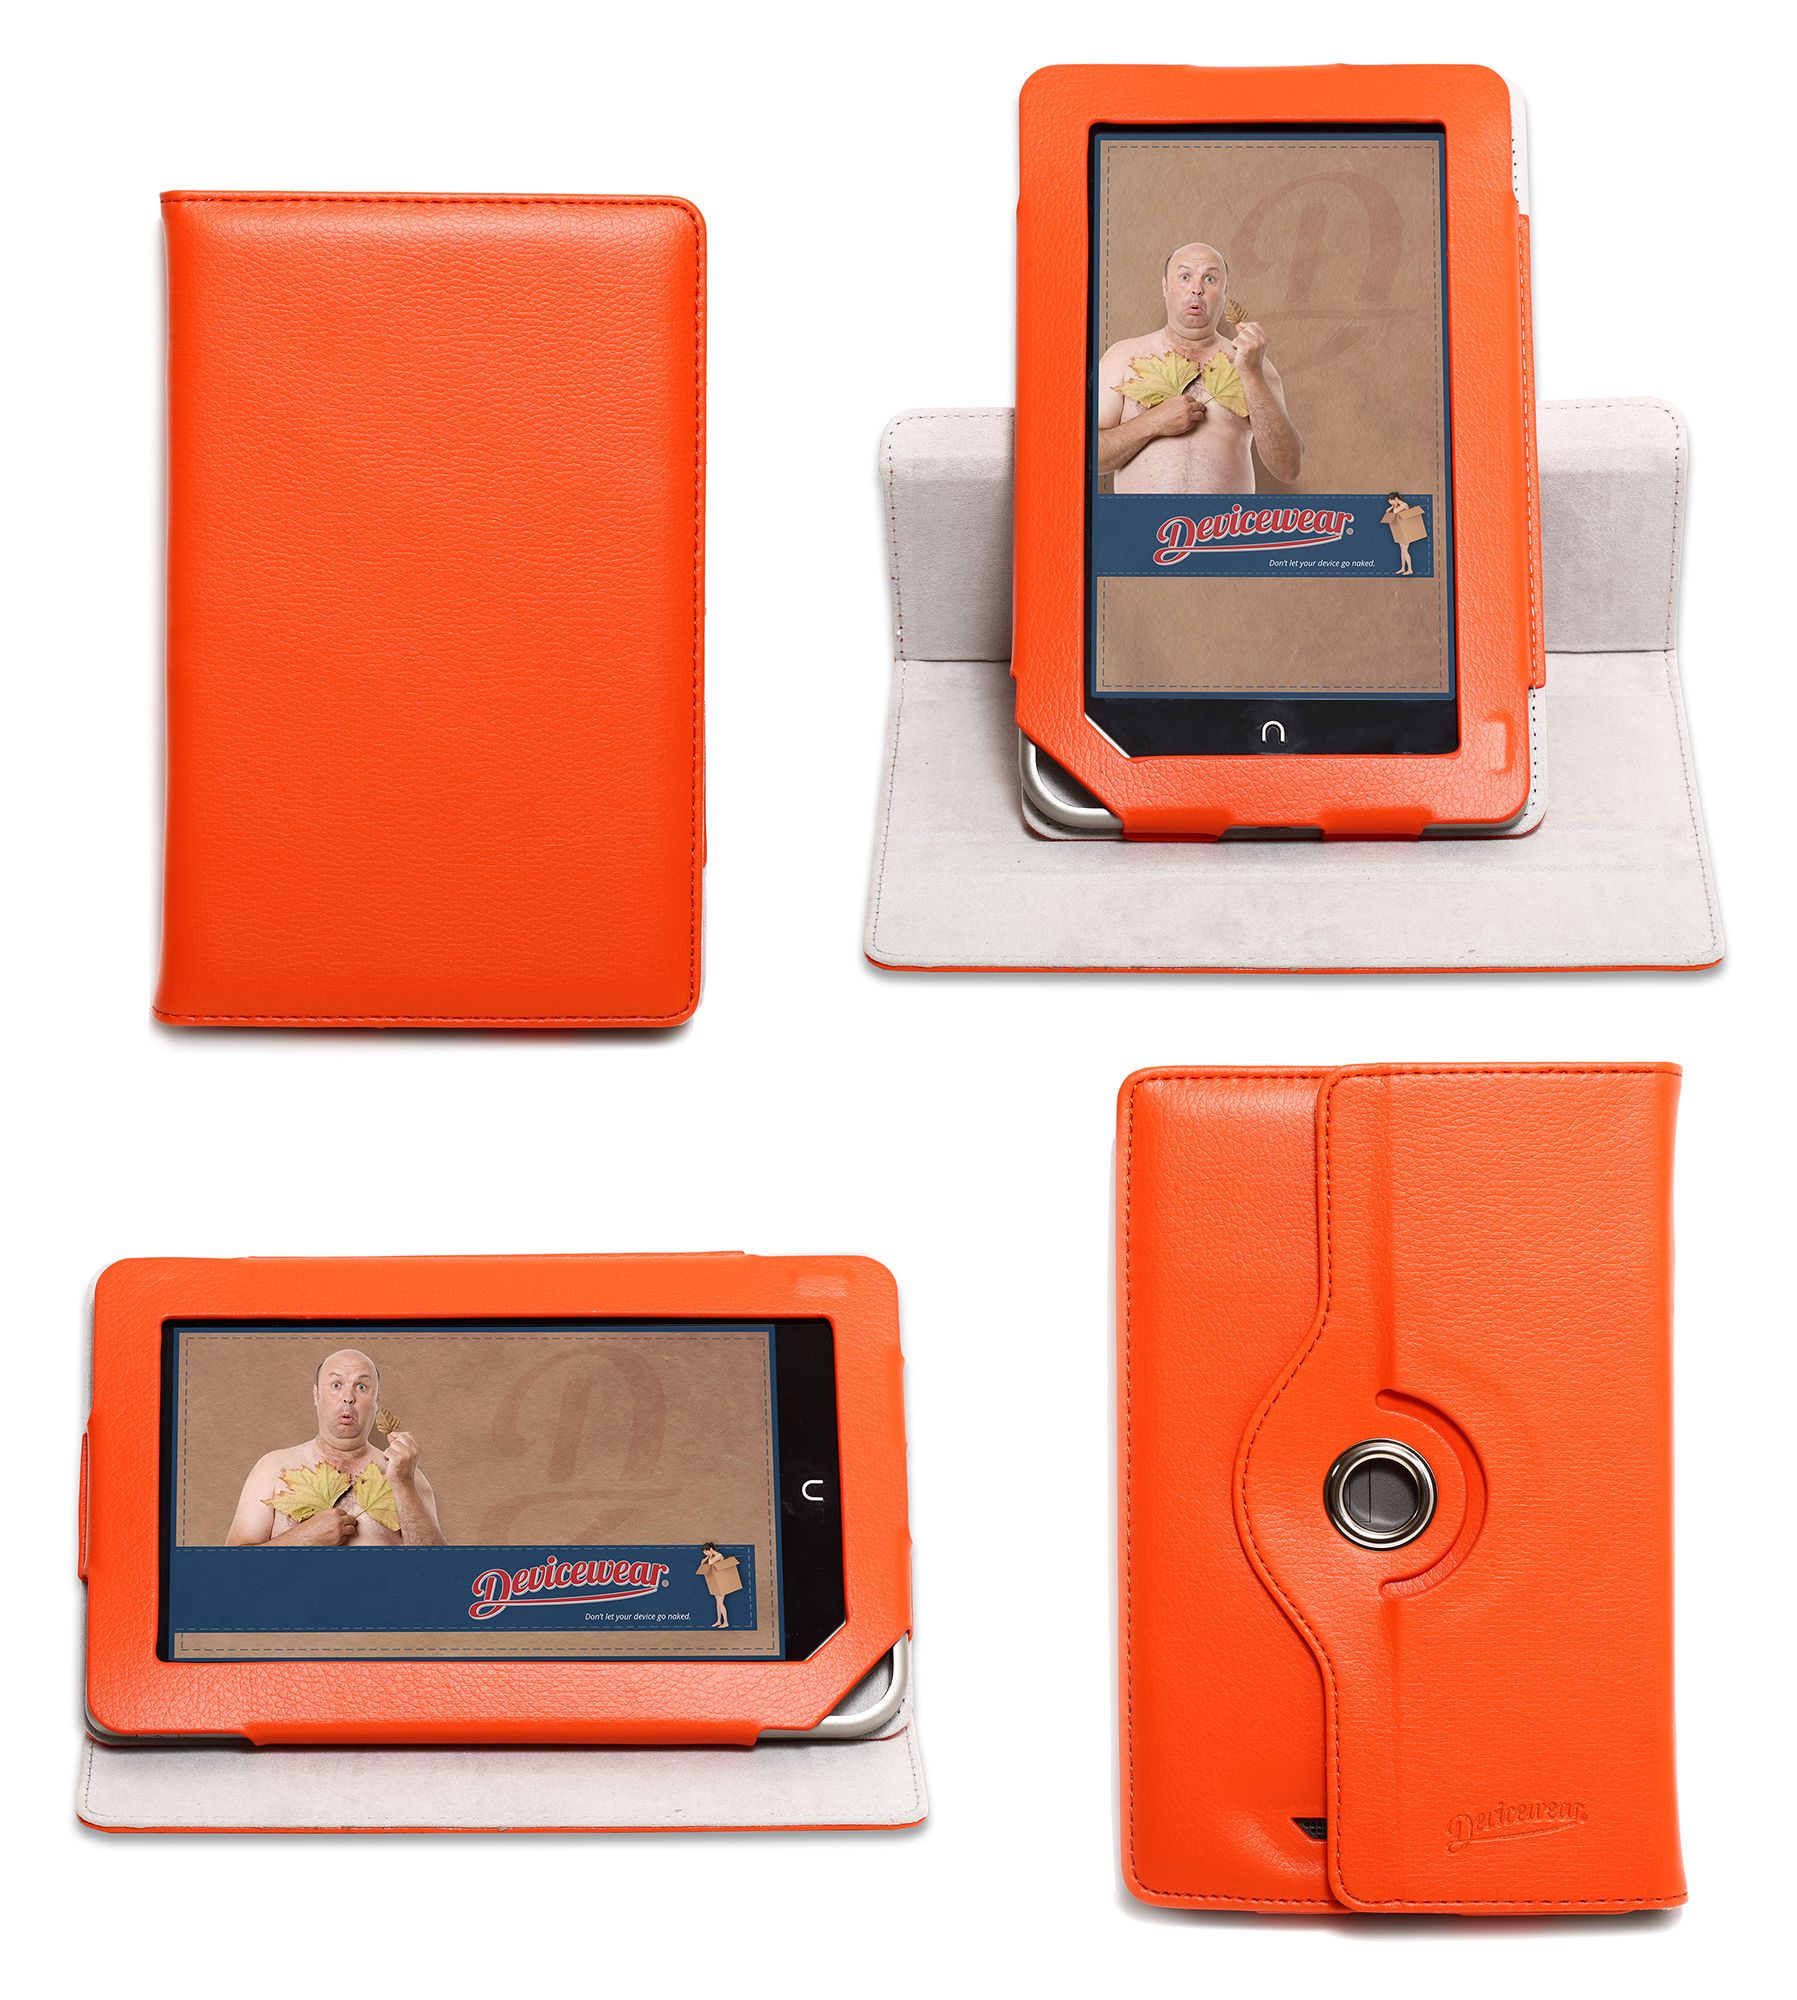  360 Rotating Orange Nook Tablet Color Case Vertical Stand Cover